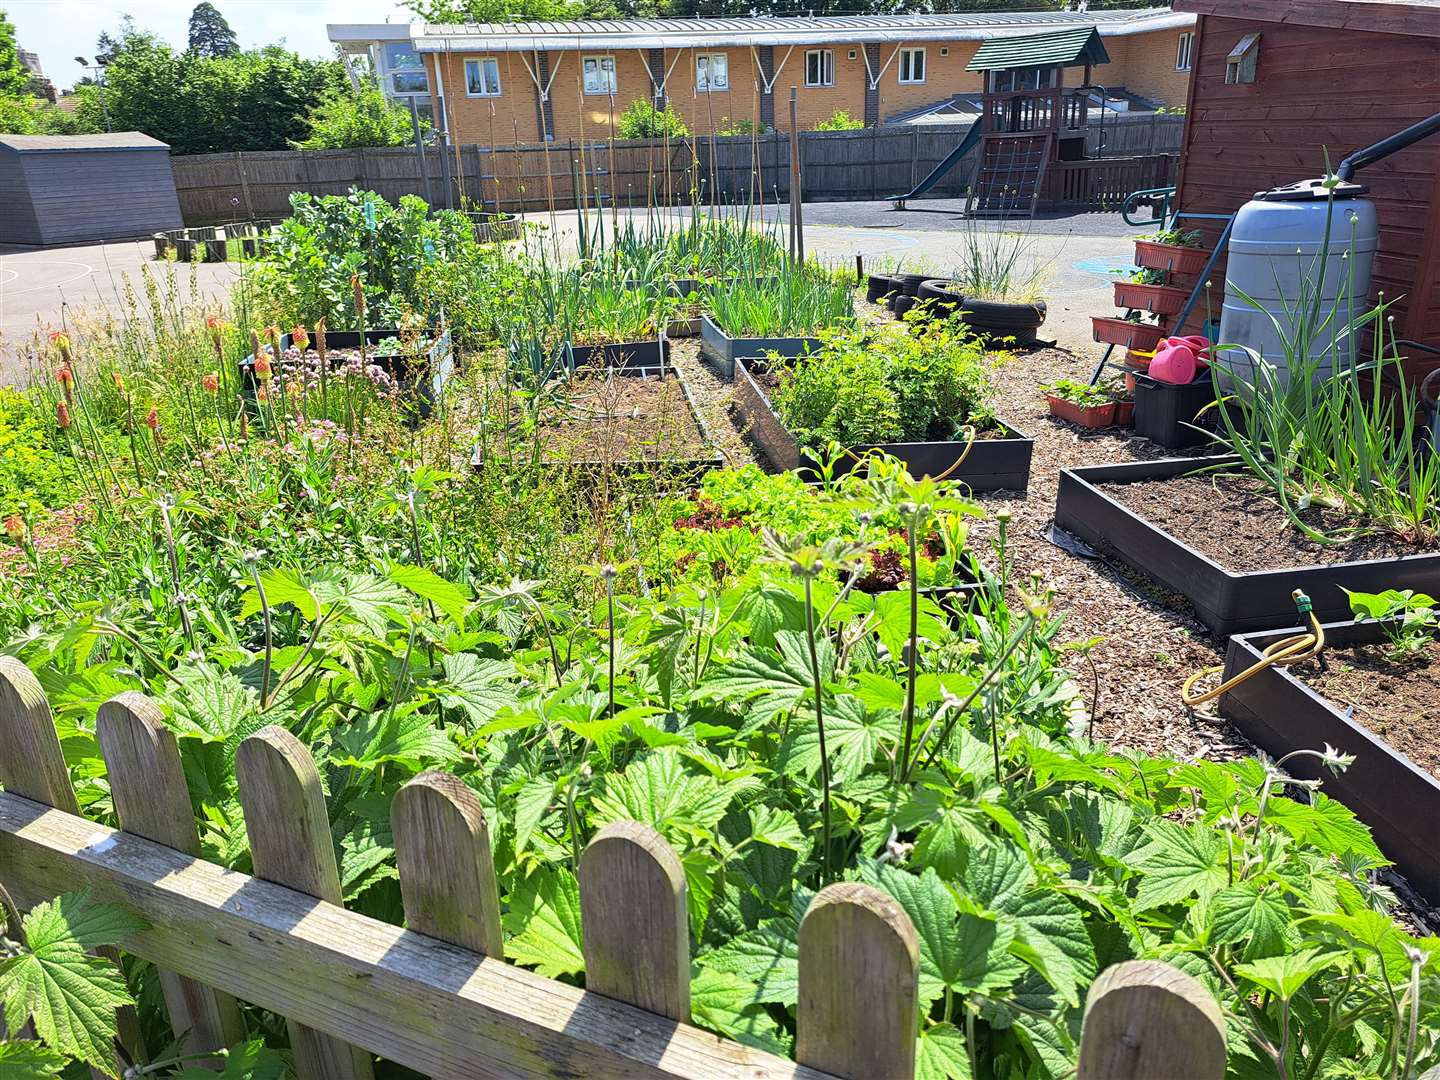 The Gardening Club's vegetable plot